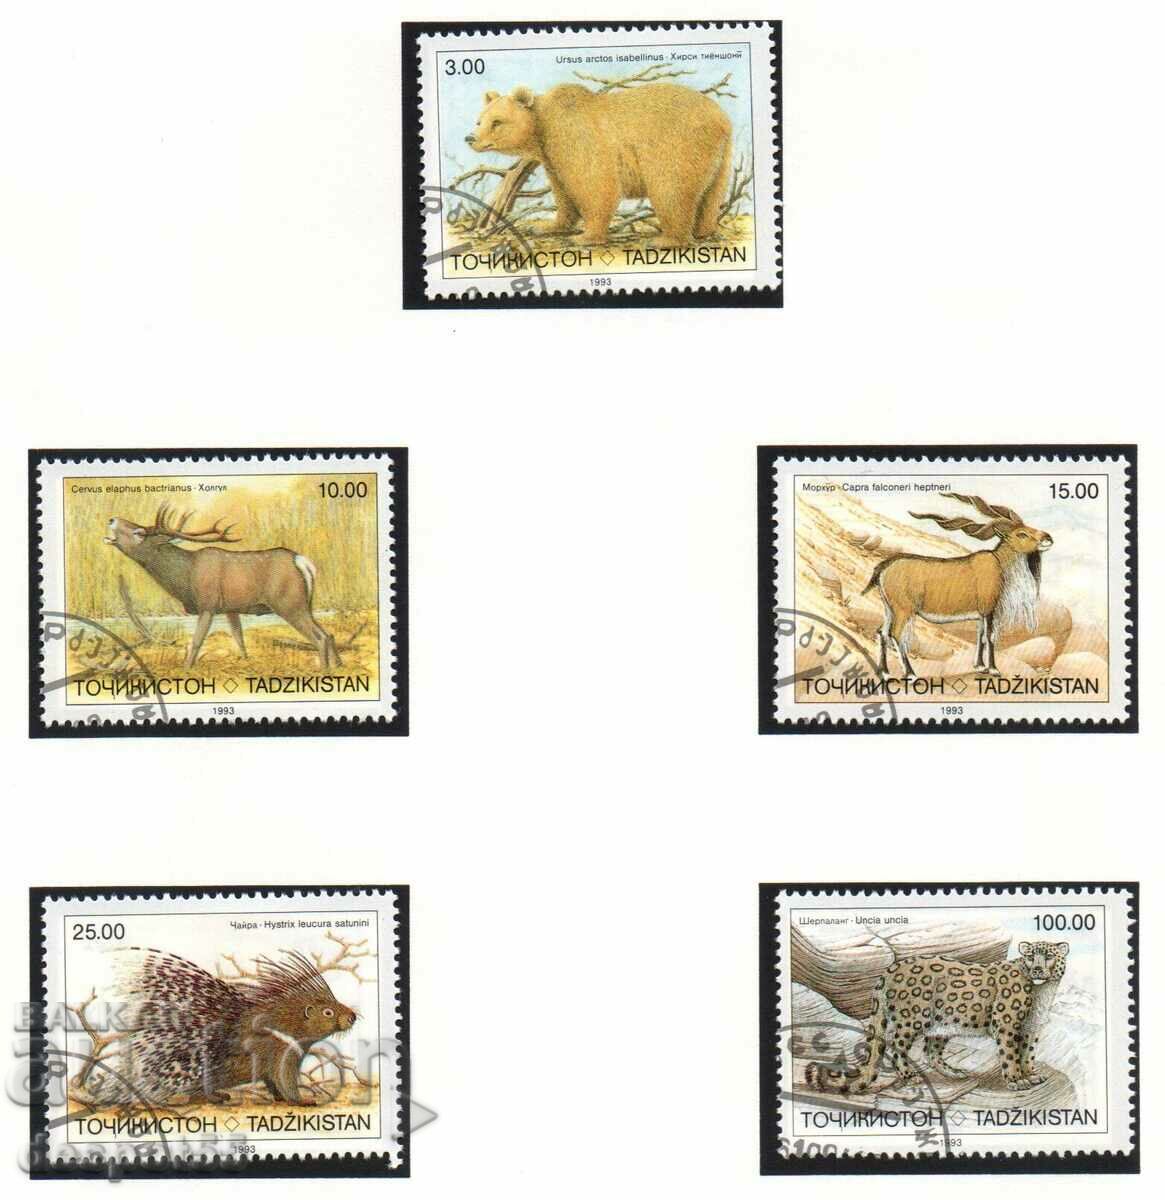 1993. Tajikistan. Endangered mammals.